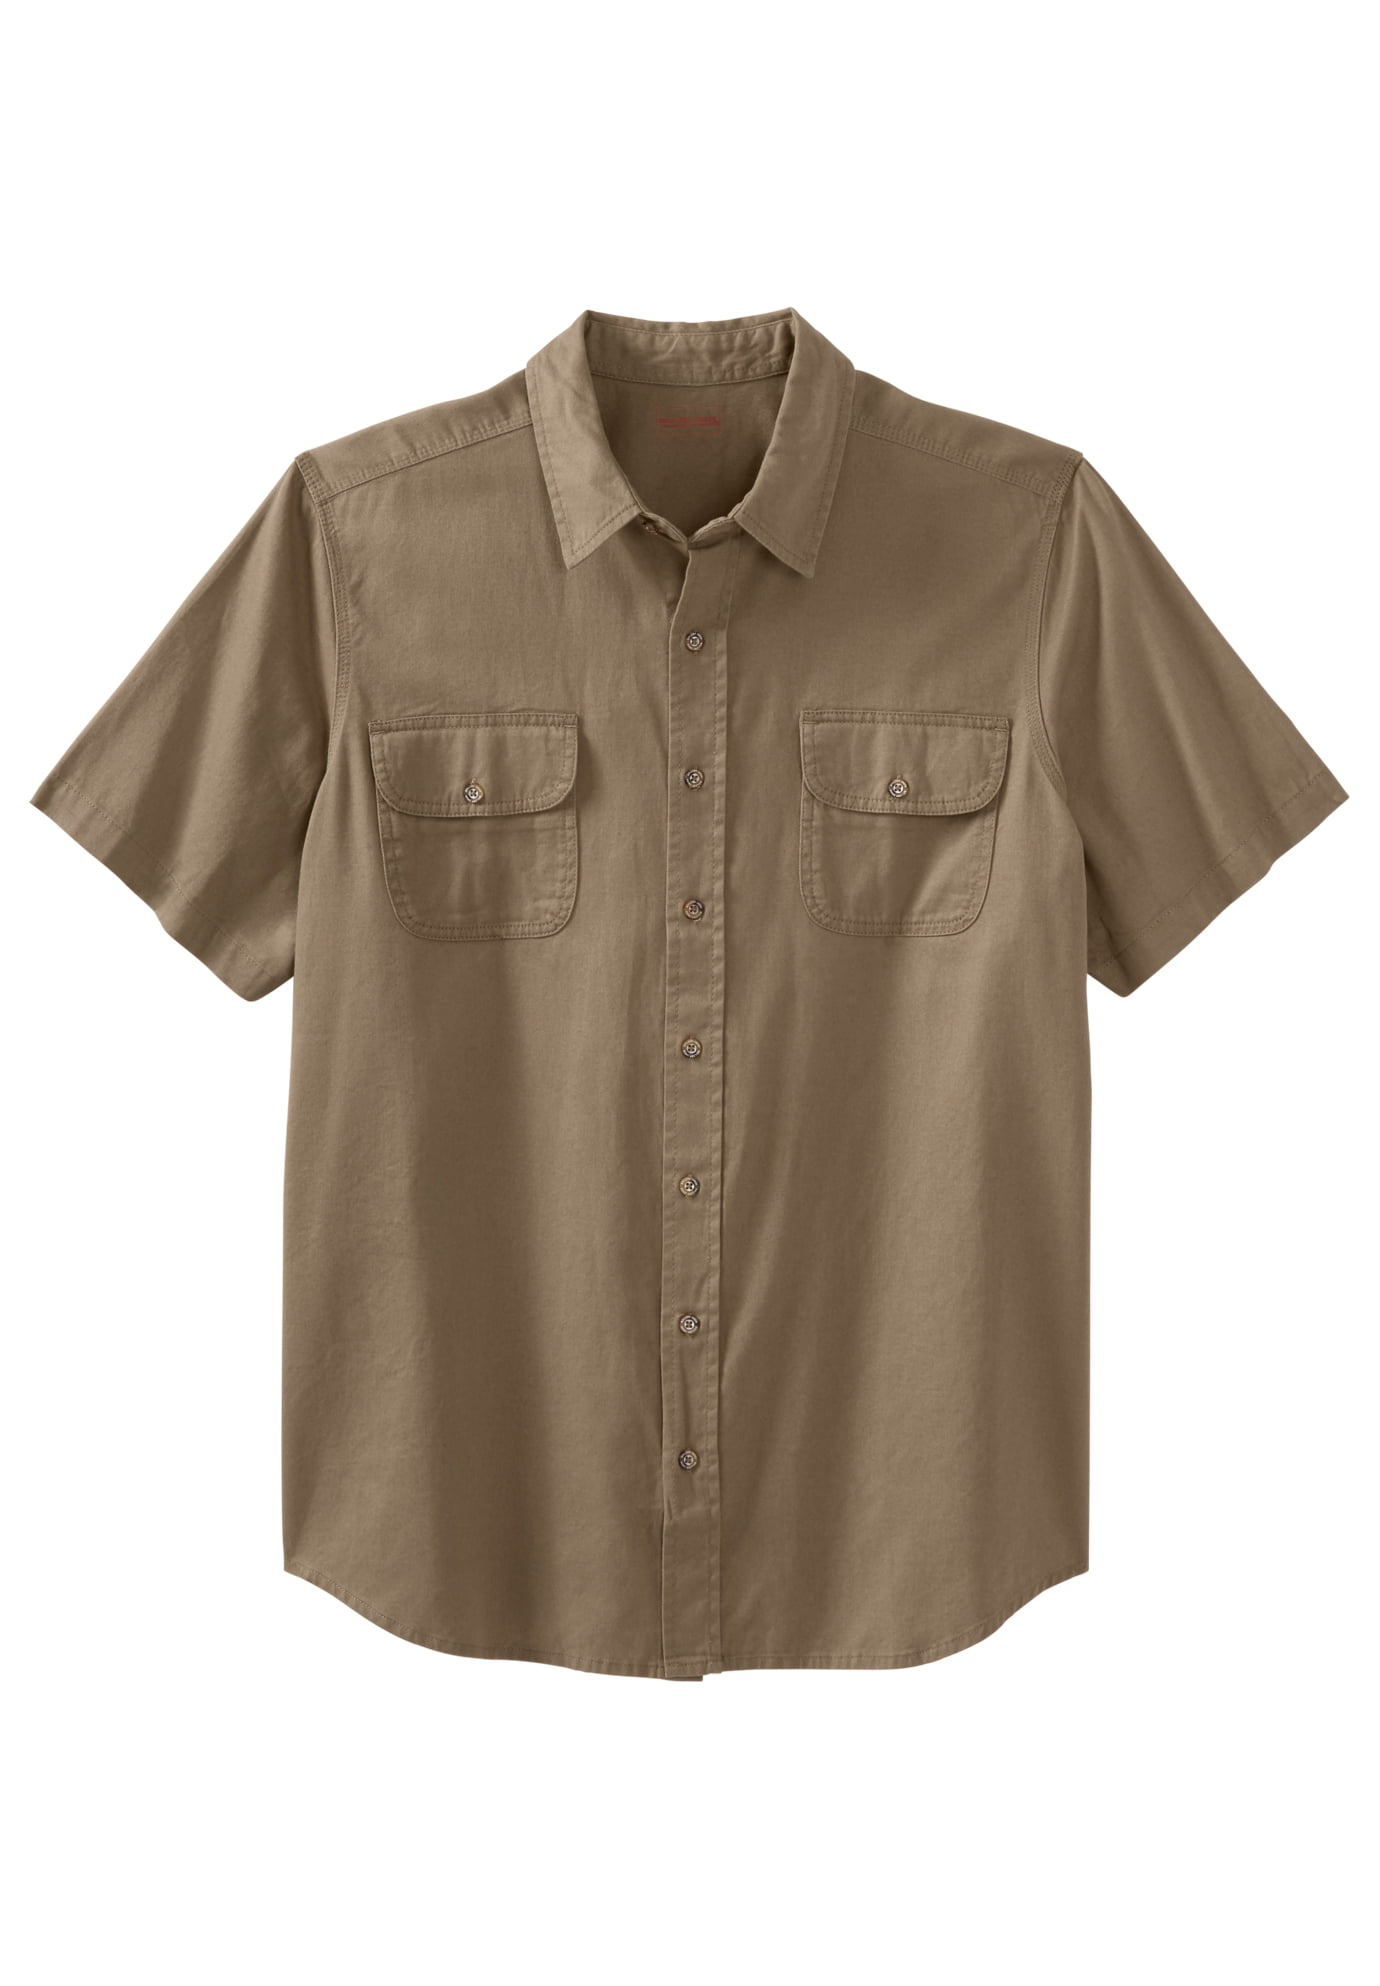 Boulder Creek by Kingsize Mens Big & Tall Short Sleeve Denim & Twill Shirt